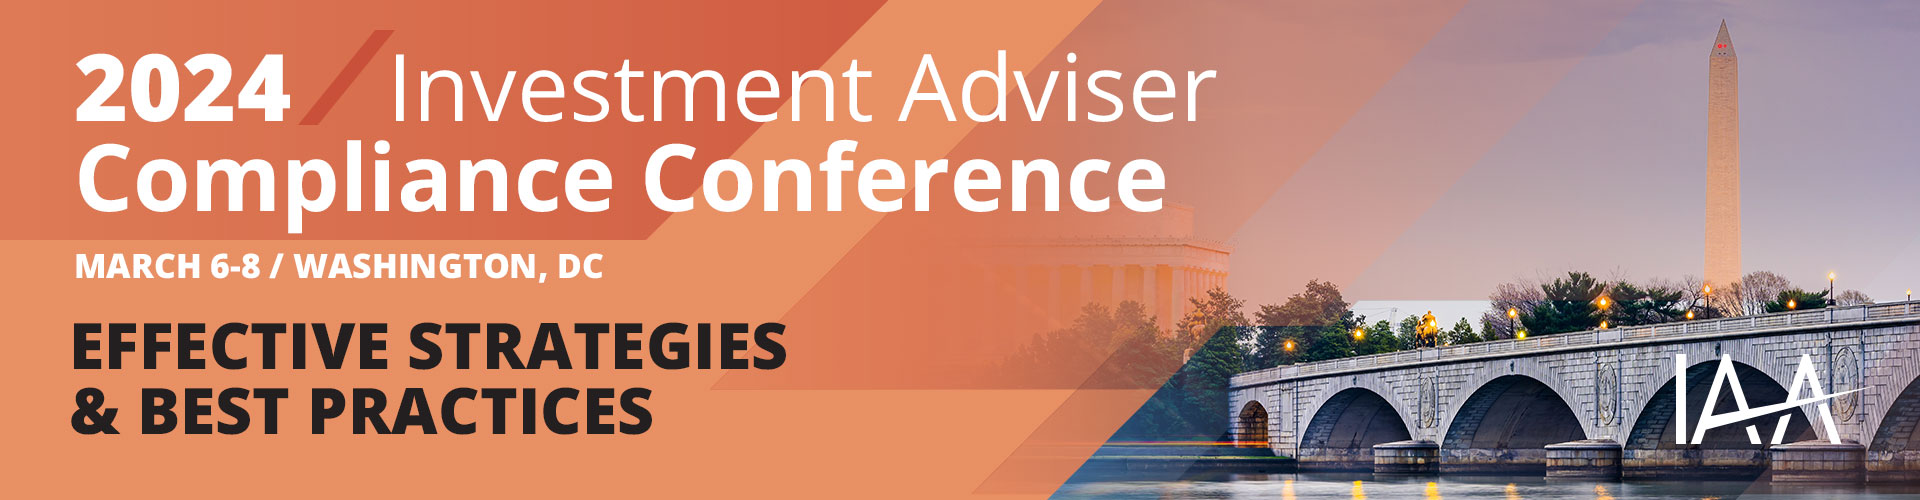 2024 Investment Adviser Compliance Conference Investment Adviser